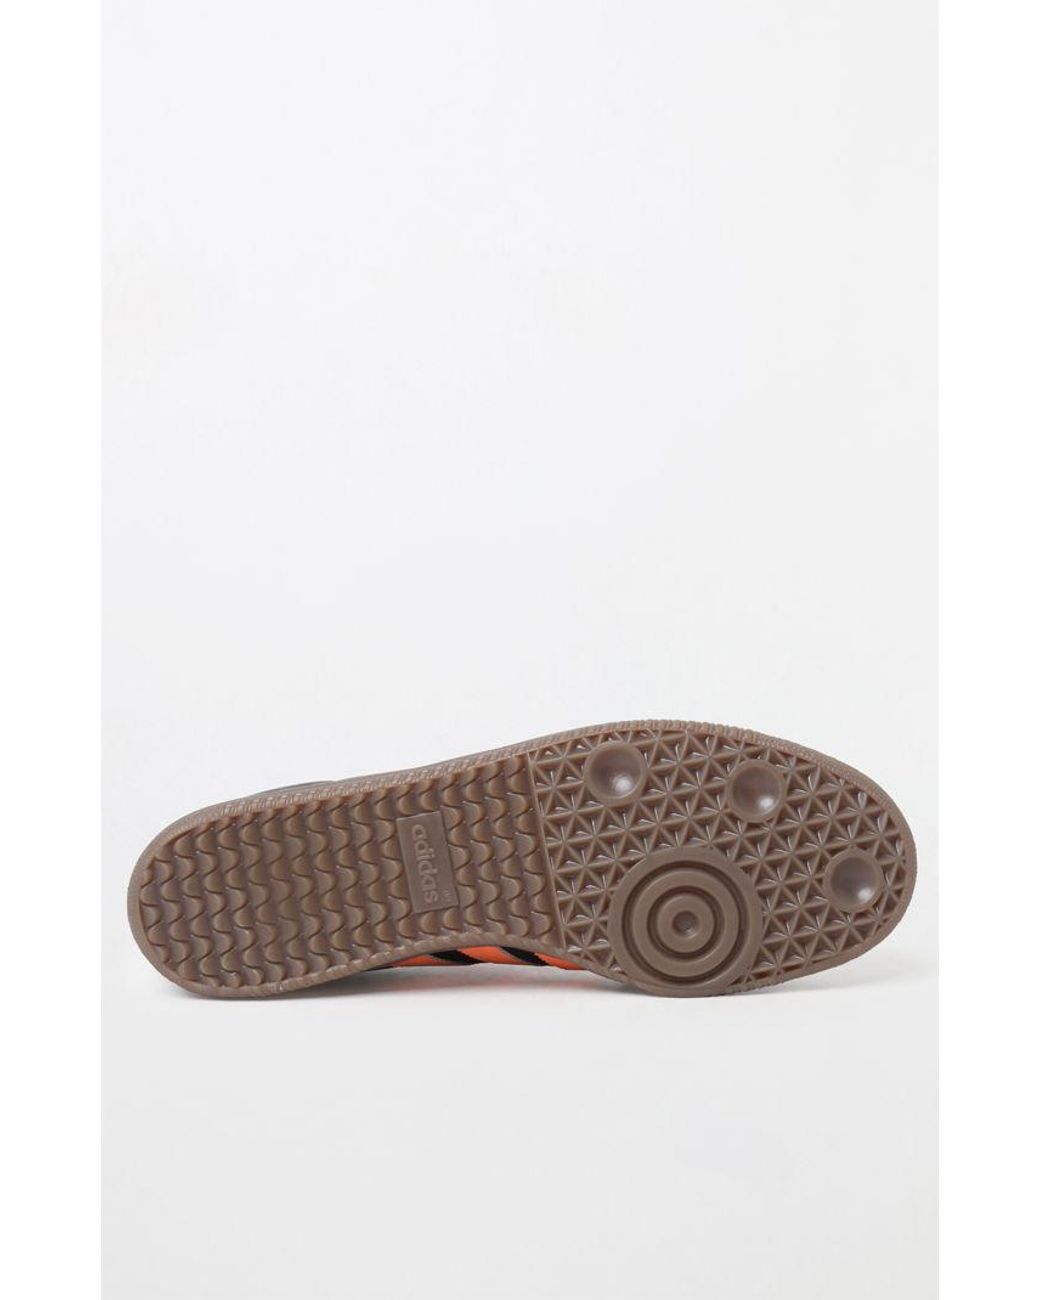 adidas Rubber Samba Og Black & Orange Shoes for Men | Lyst